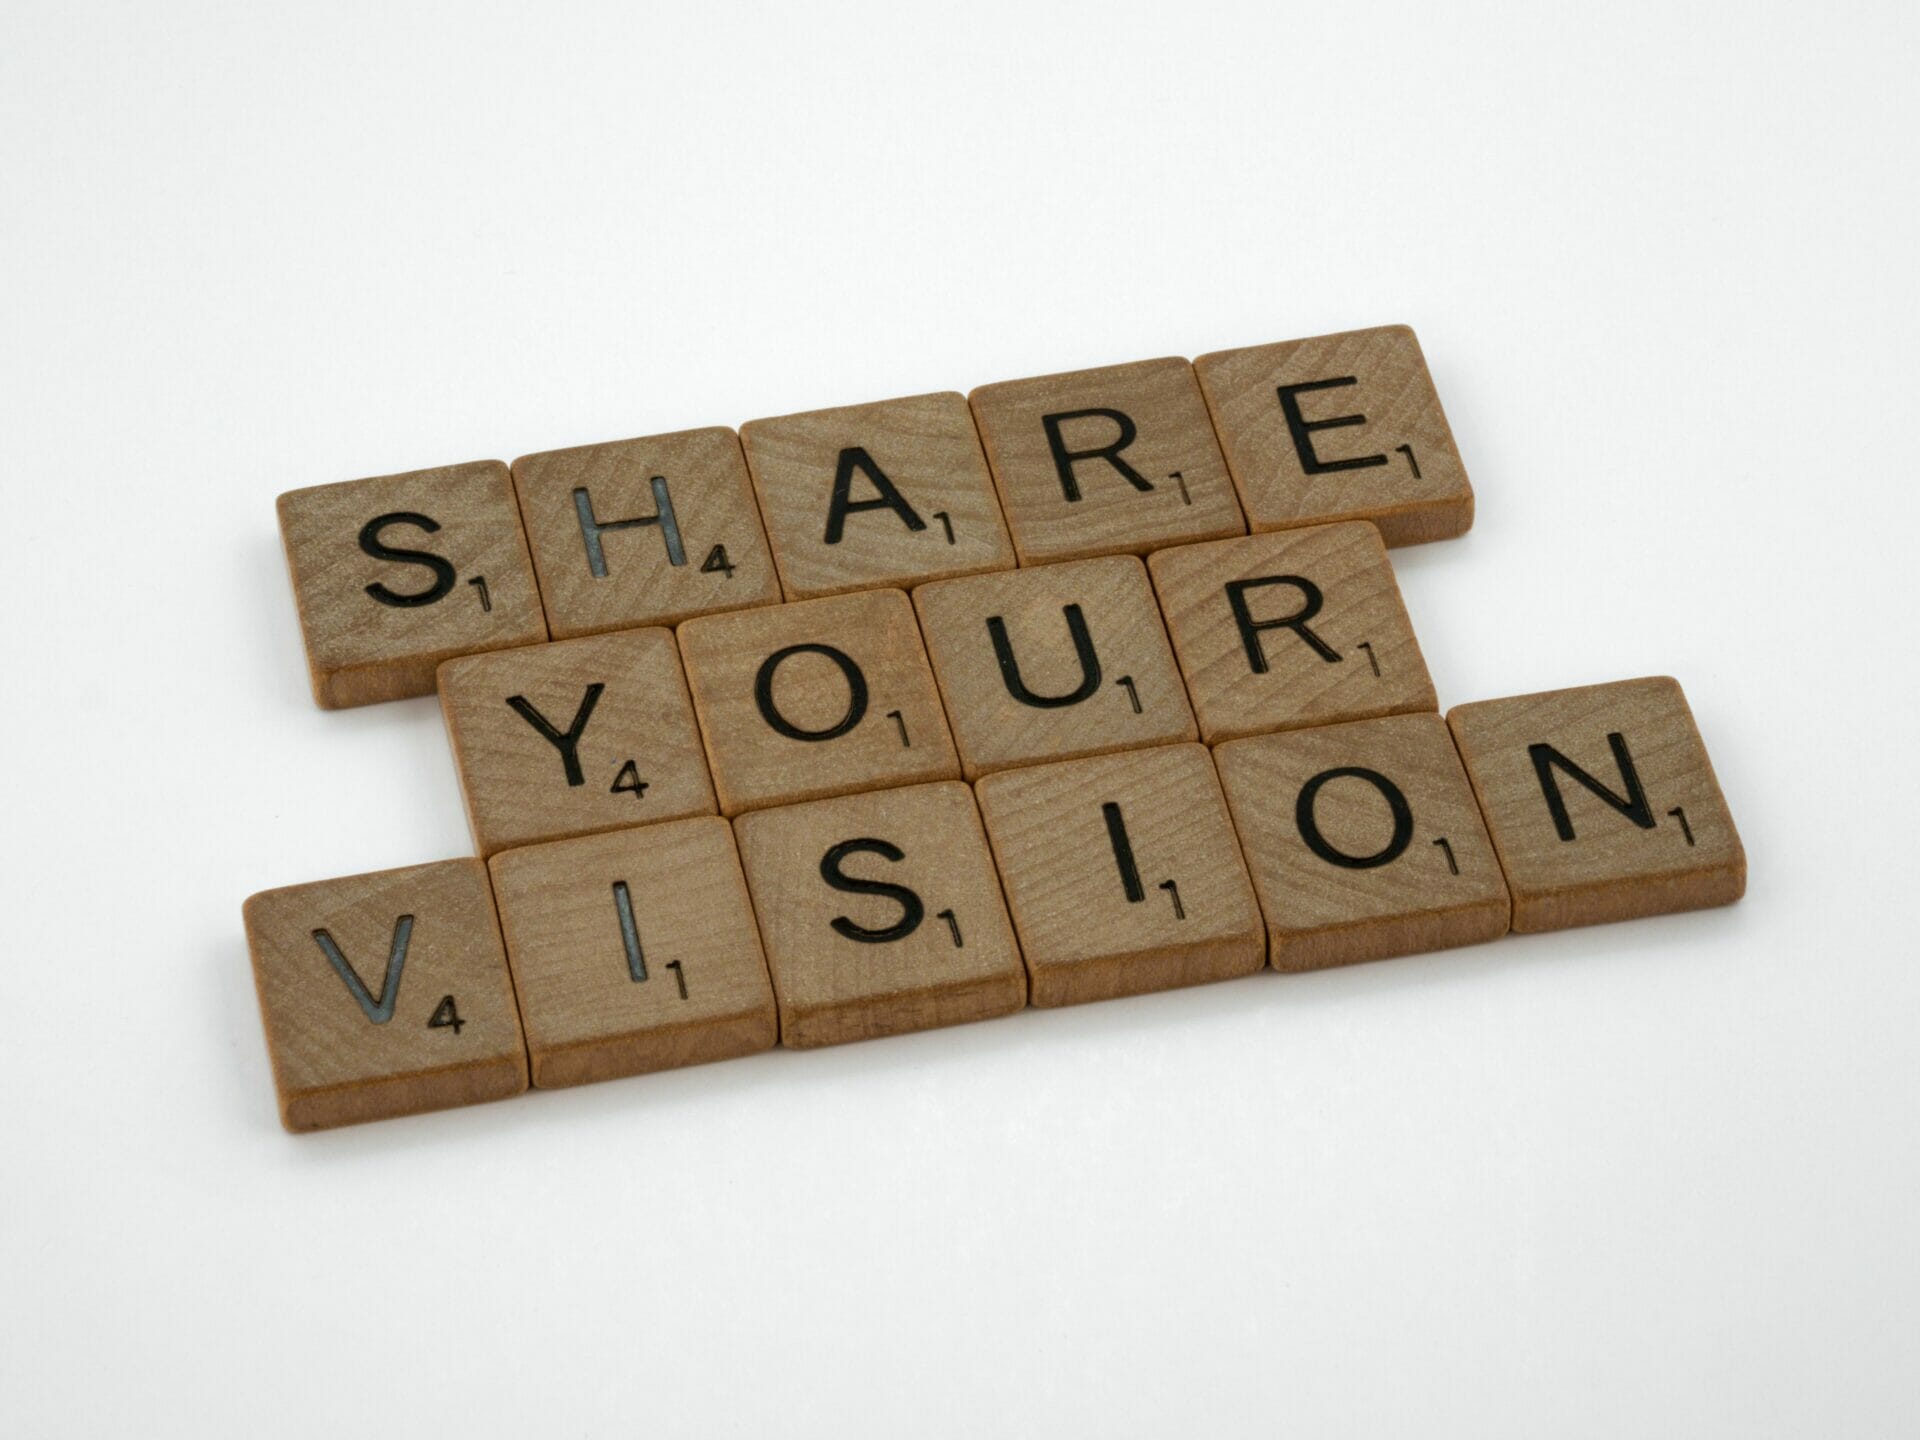 Scrabble blokjes die de tekst "SHARE YOUR VISION" laten zien.